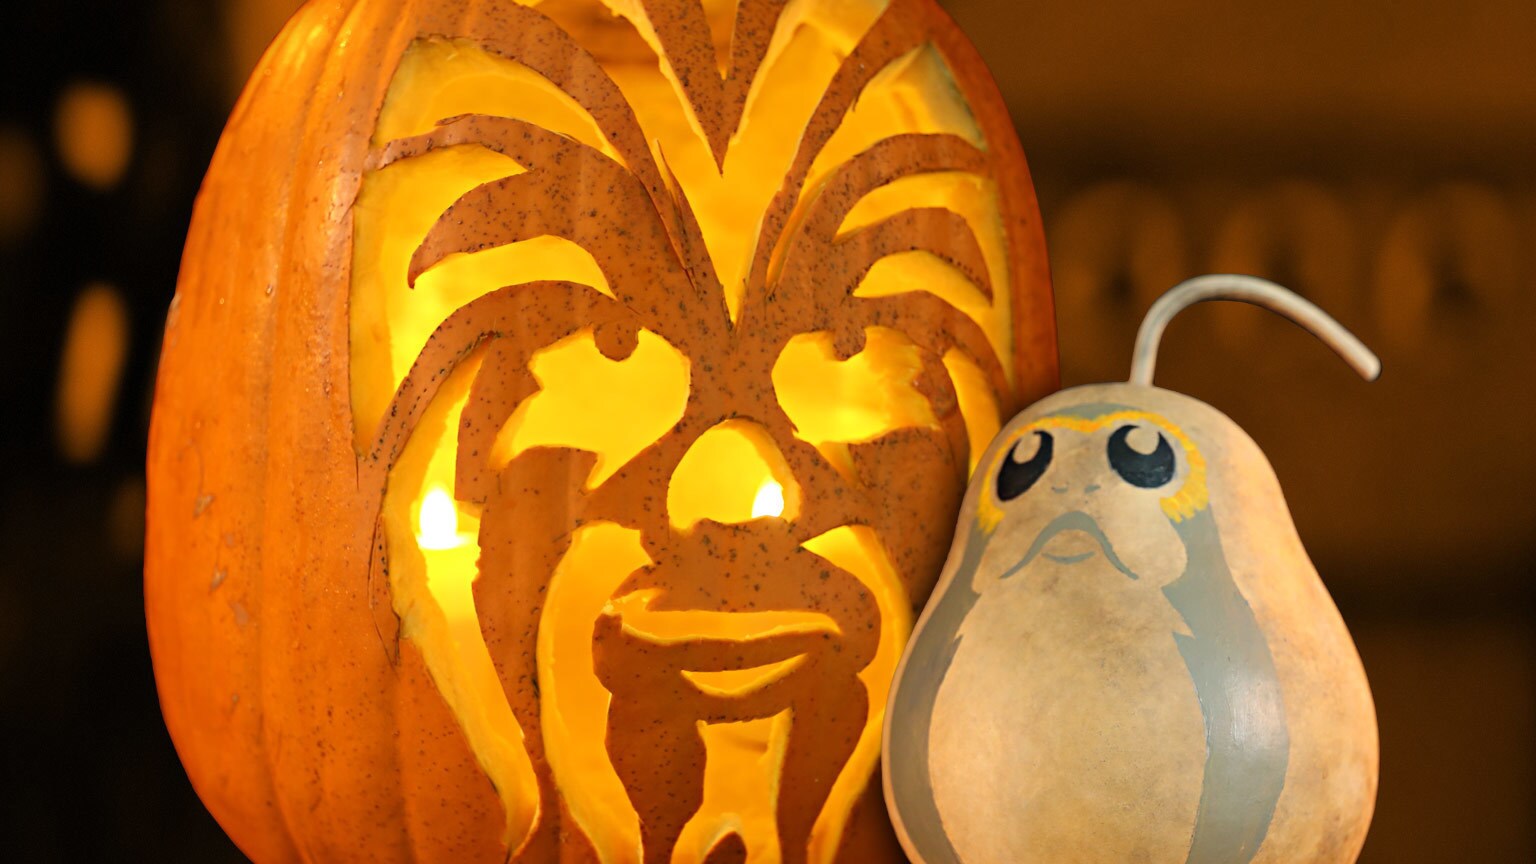 Make a Chewbacc-O'-Lantern and Porg Gourd